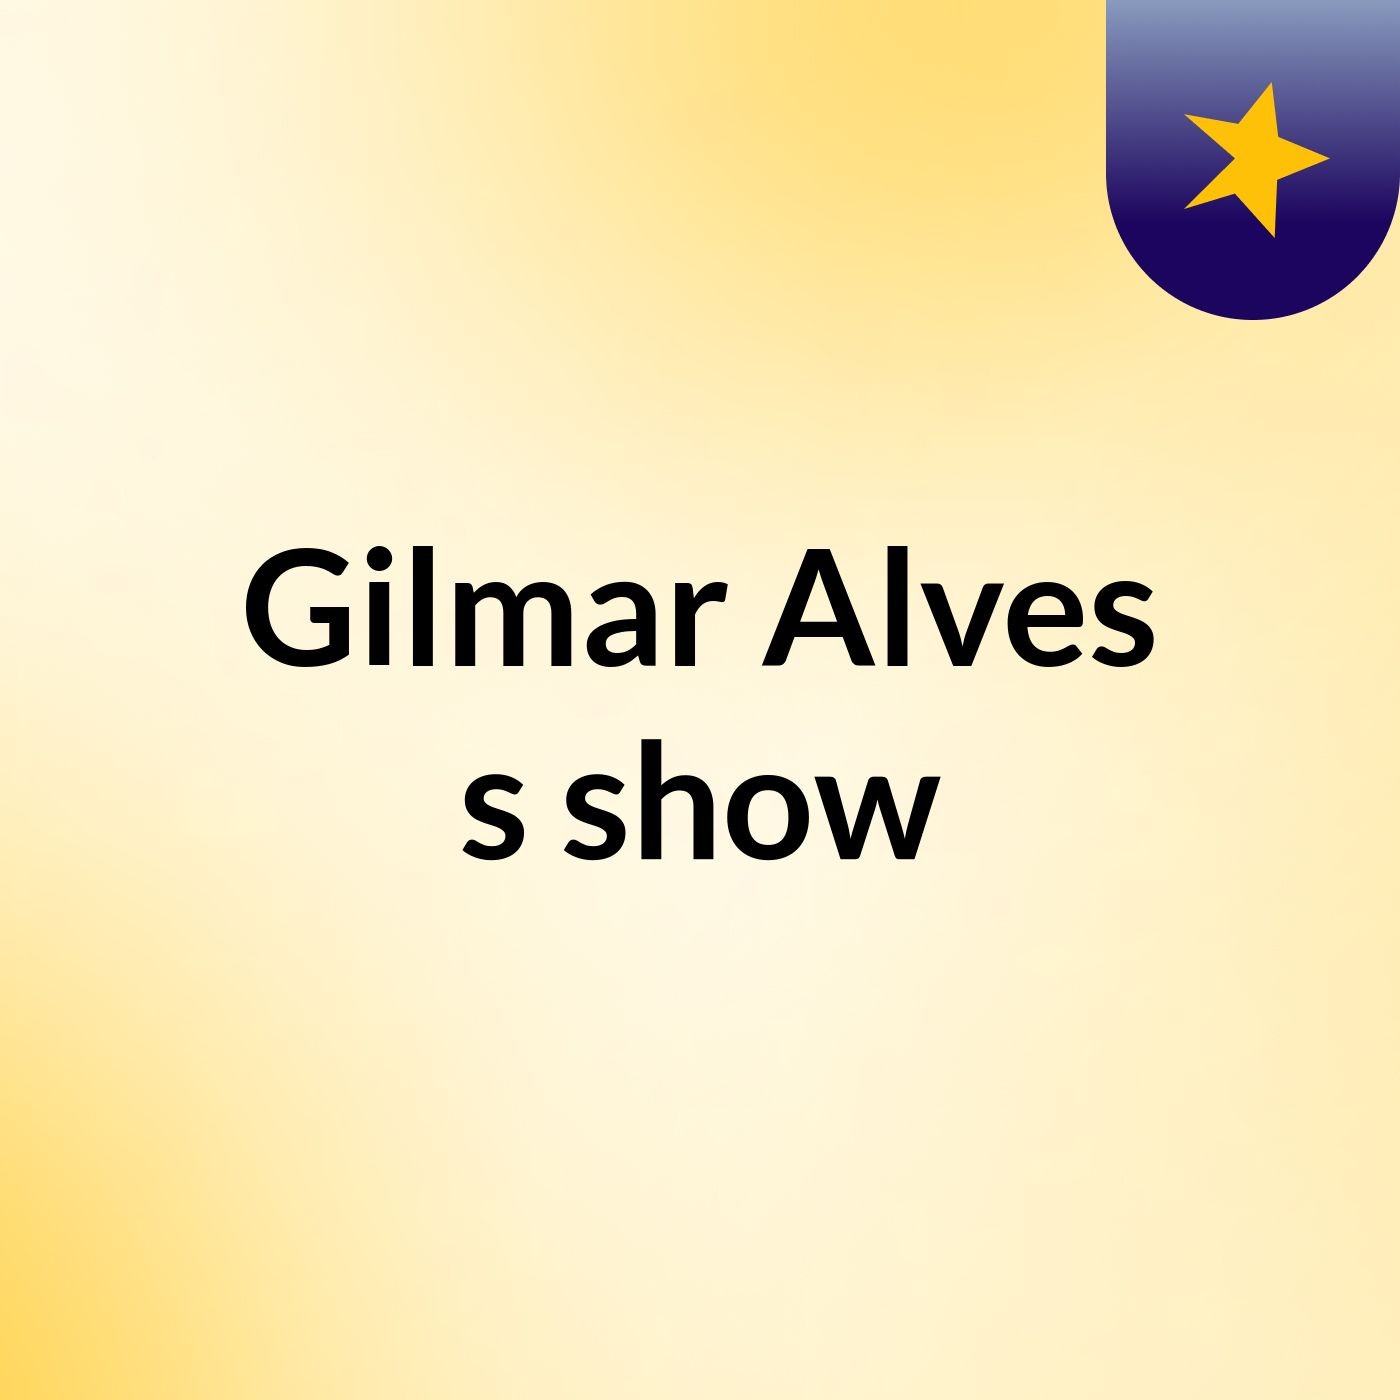 Gilmar Alves's show